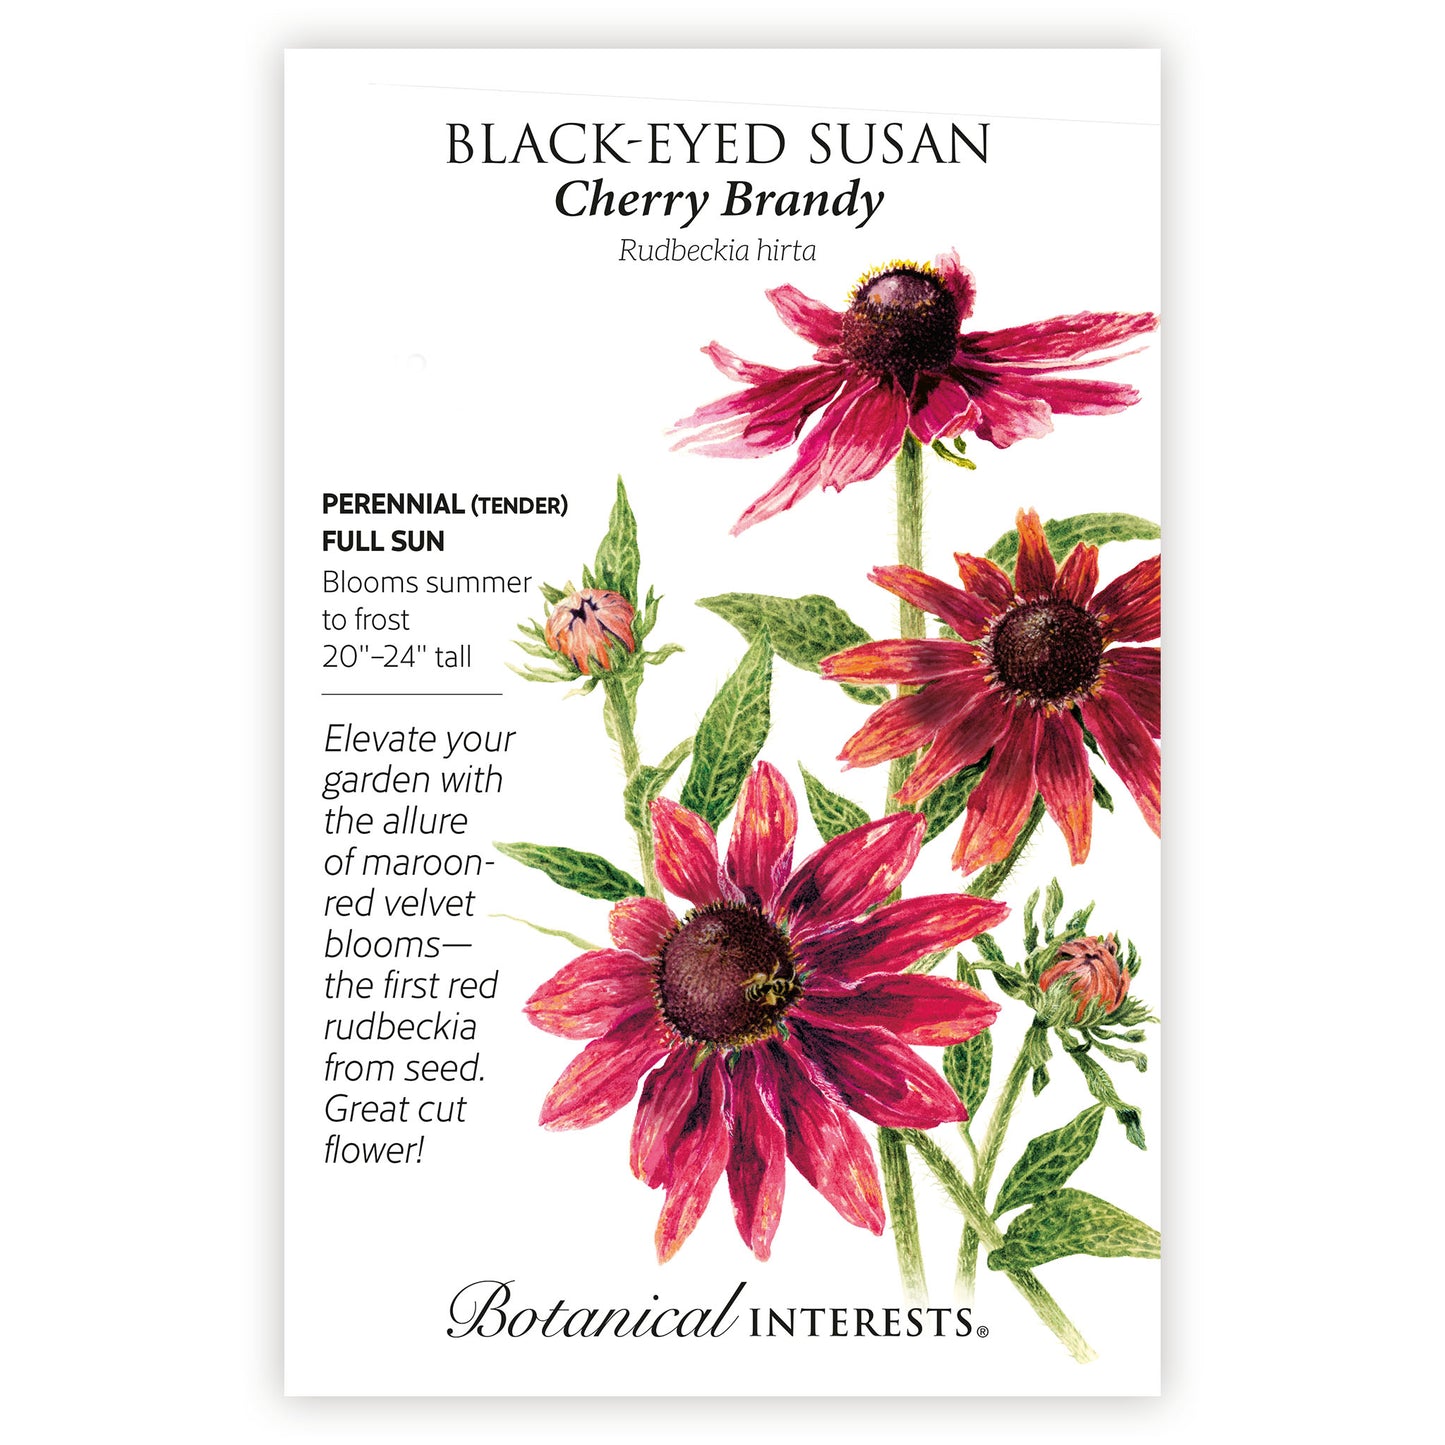 Cherry Brandy Black-Eyed Susan Seeds